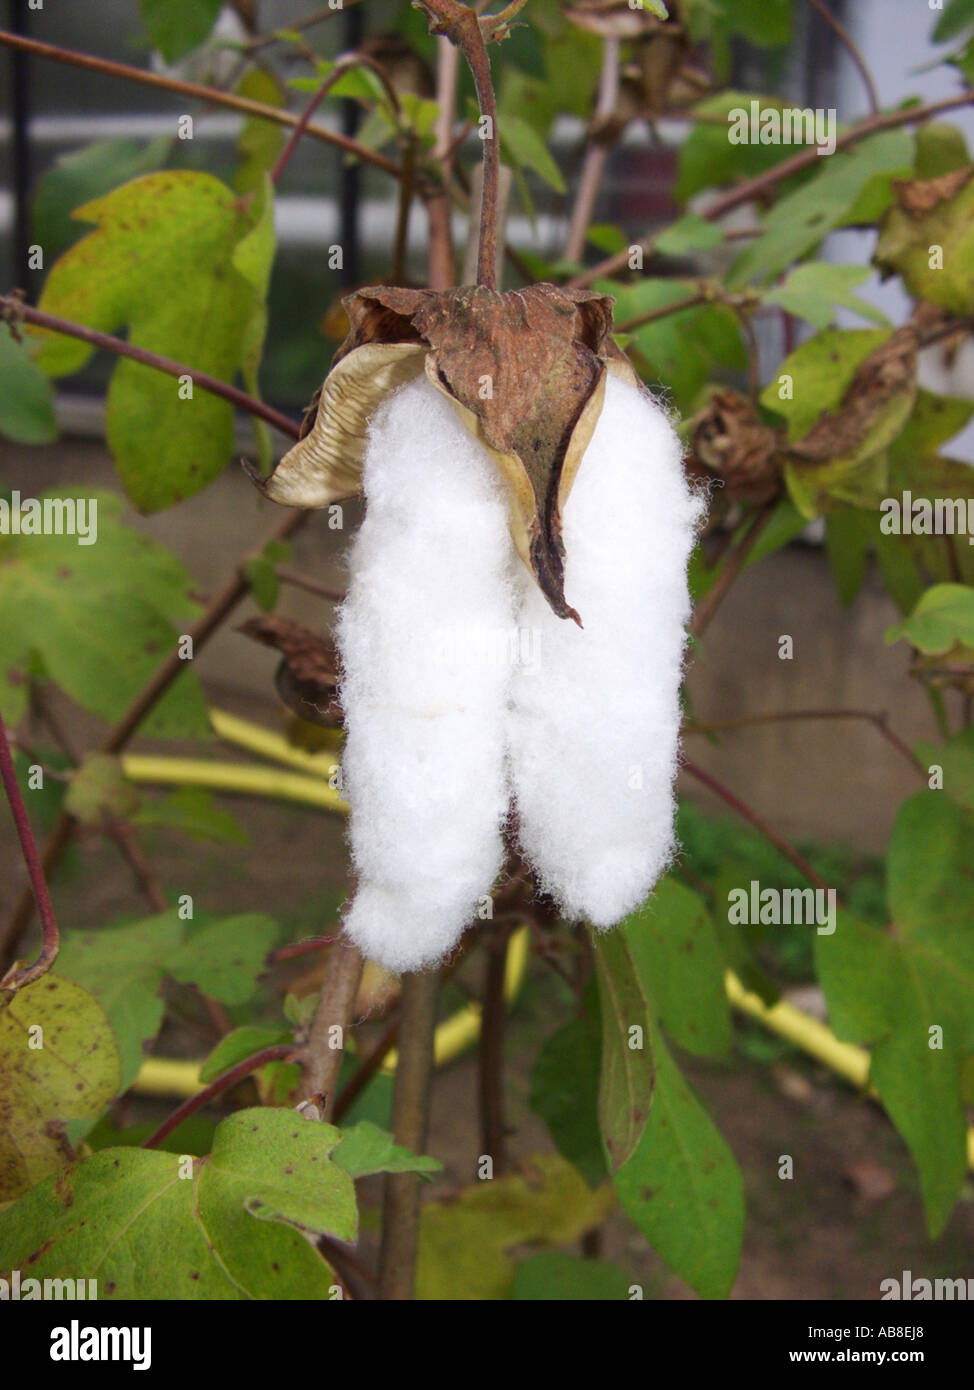 cotton (Gossypium barbadense), ripe fruits with white fibres Stock Photo